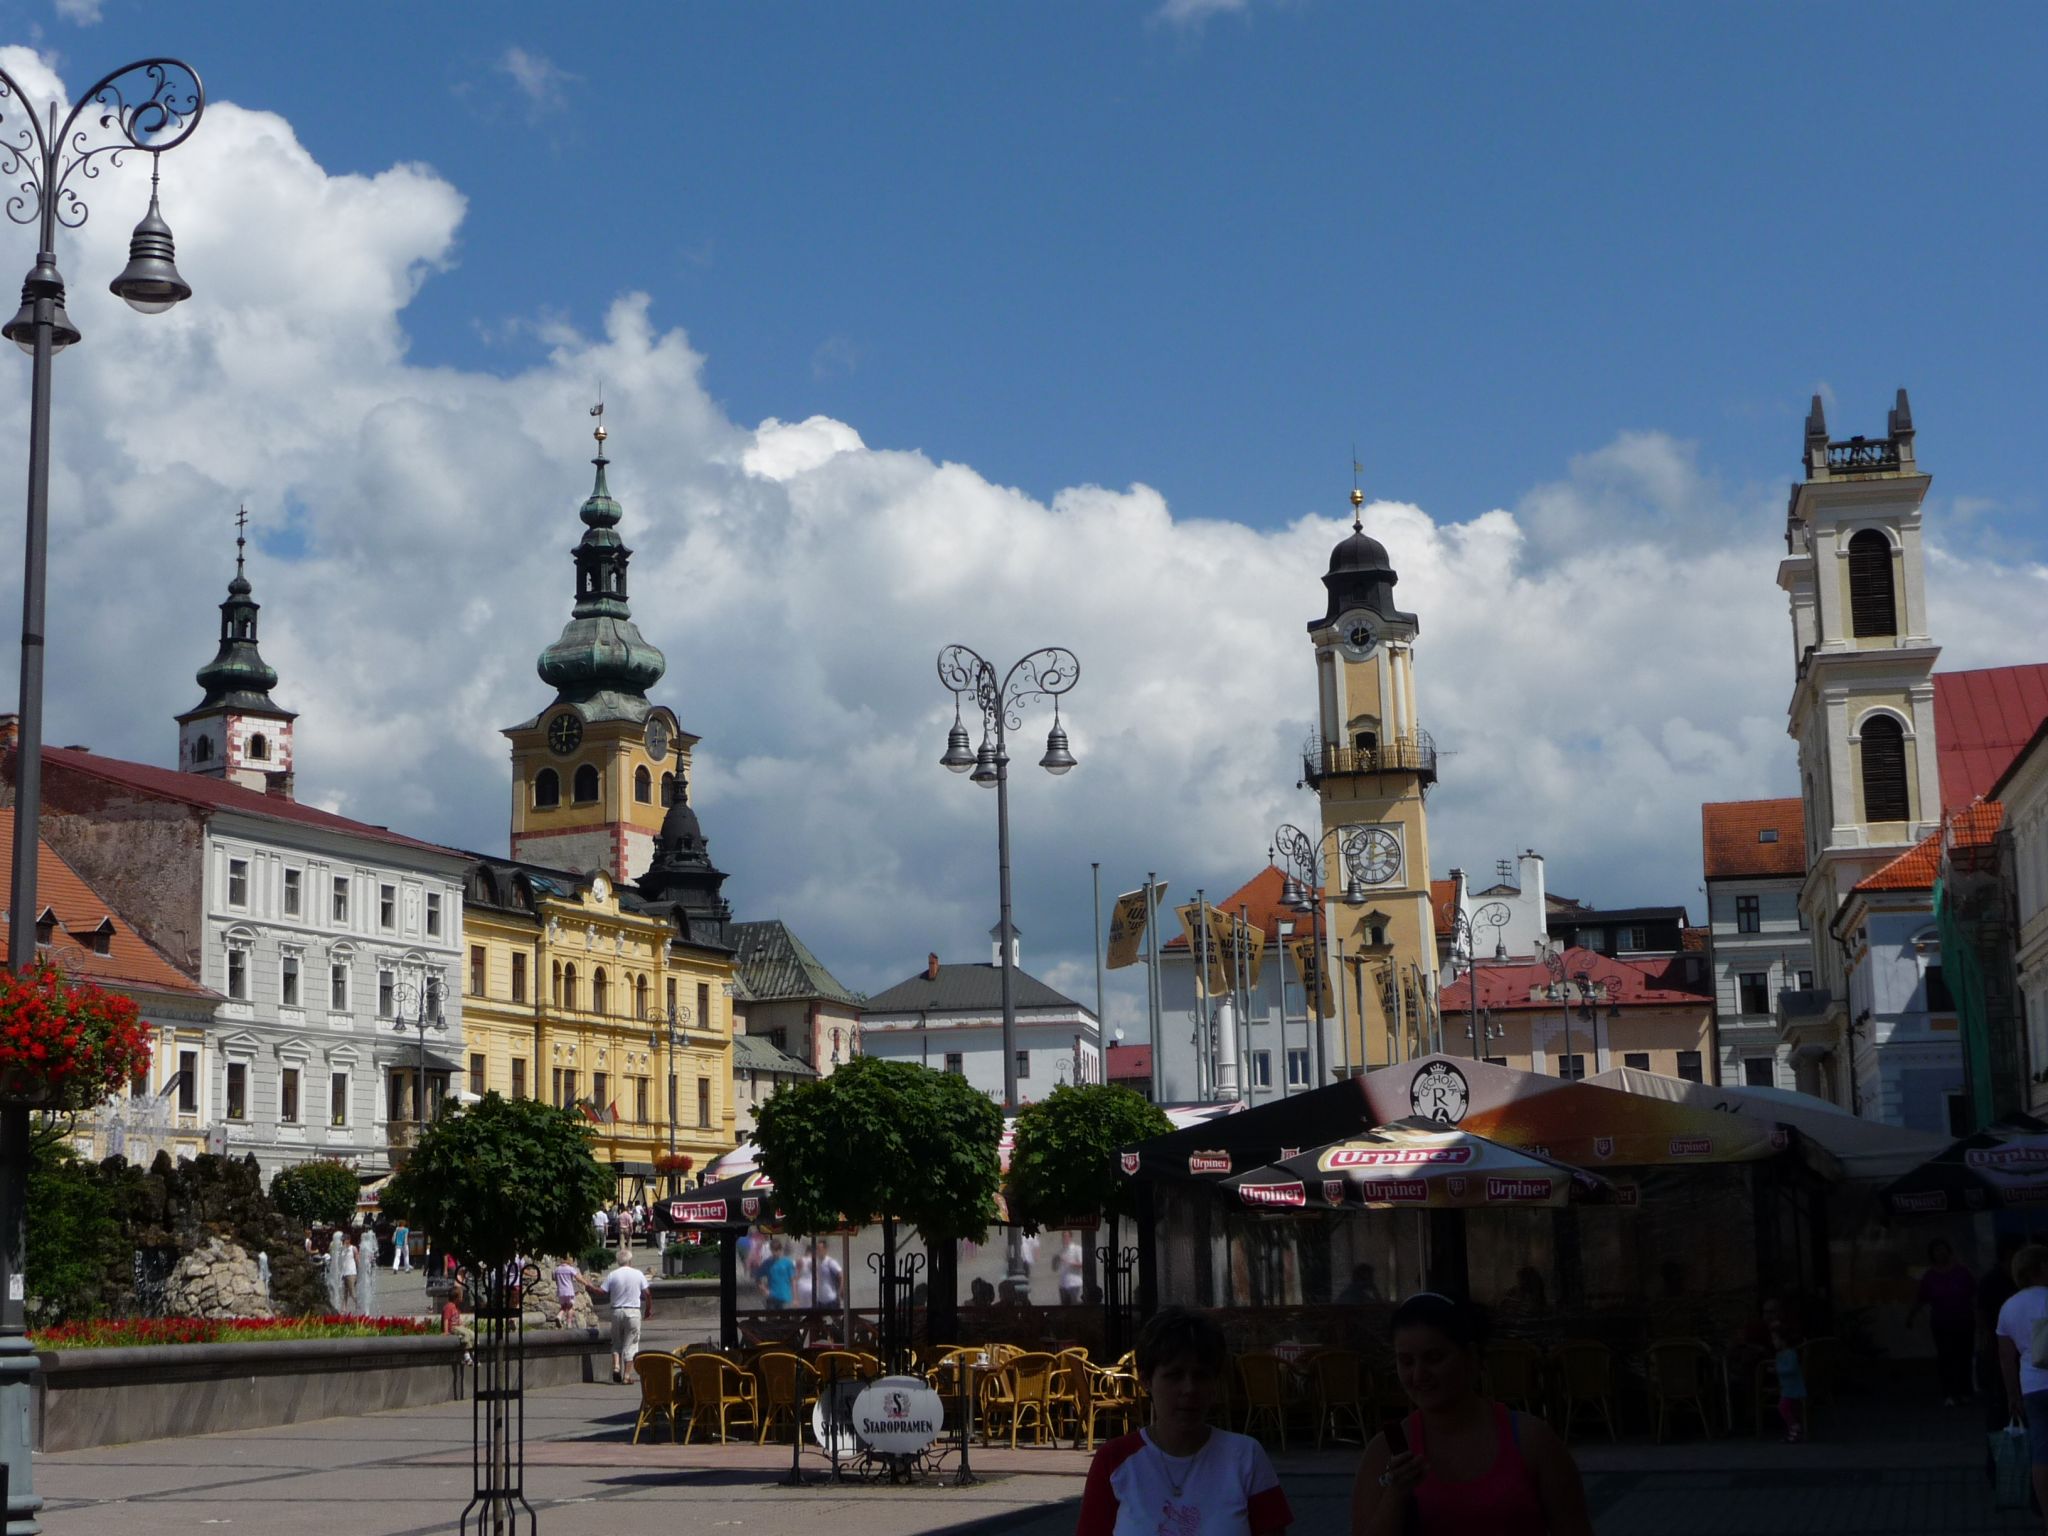 Blanska Bystrica